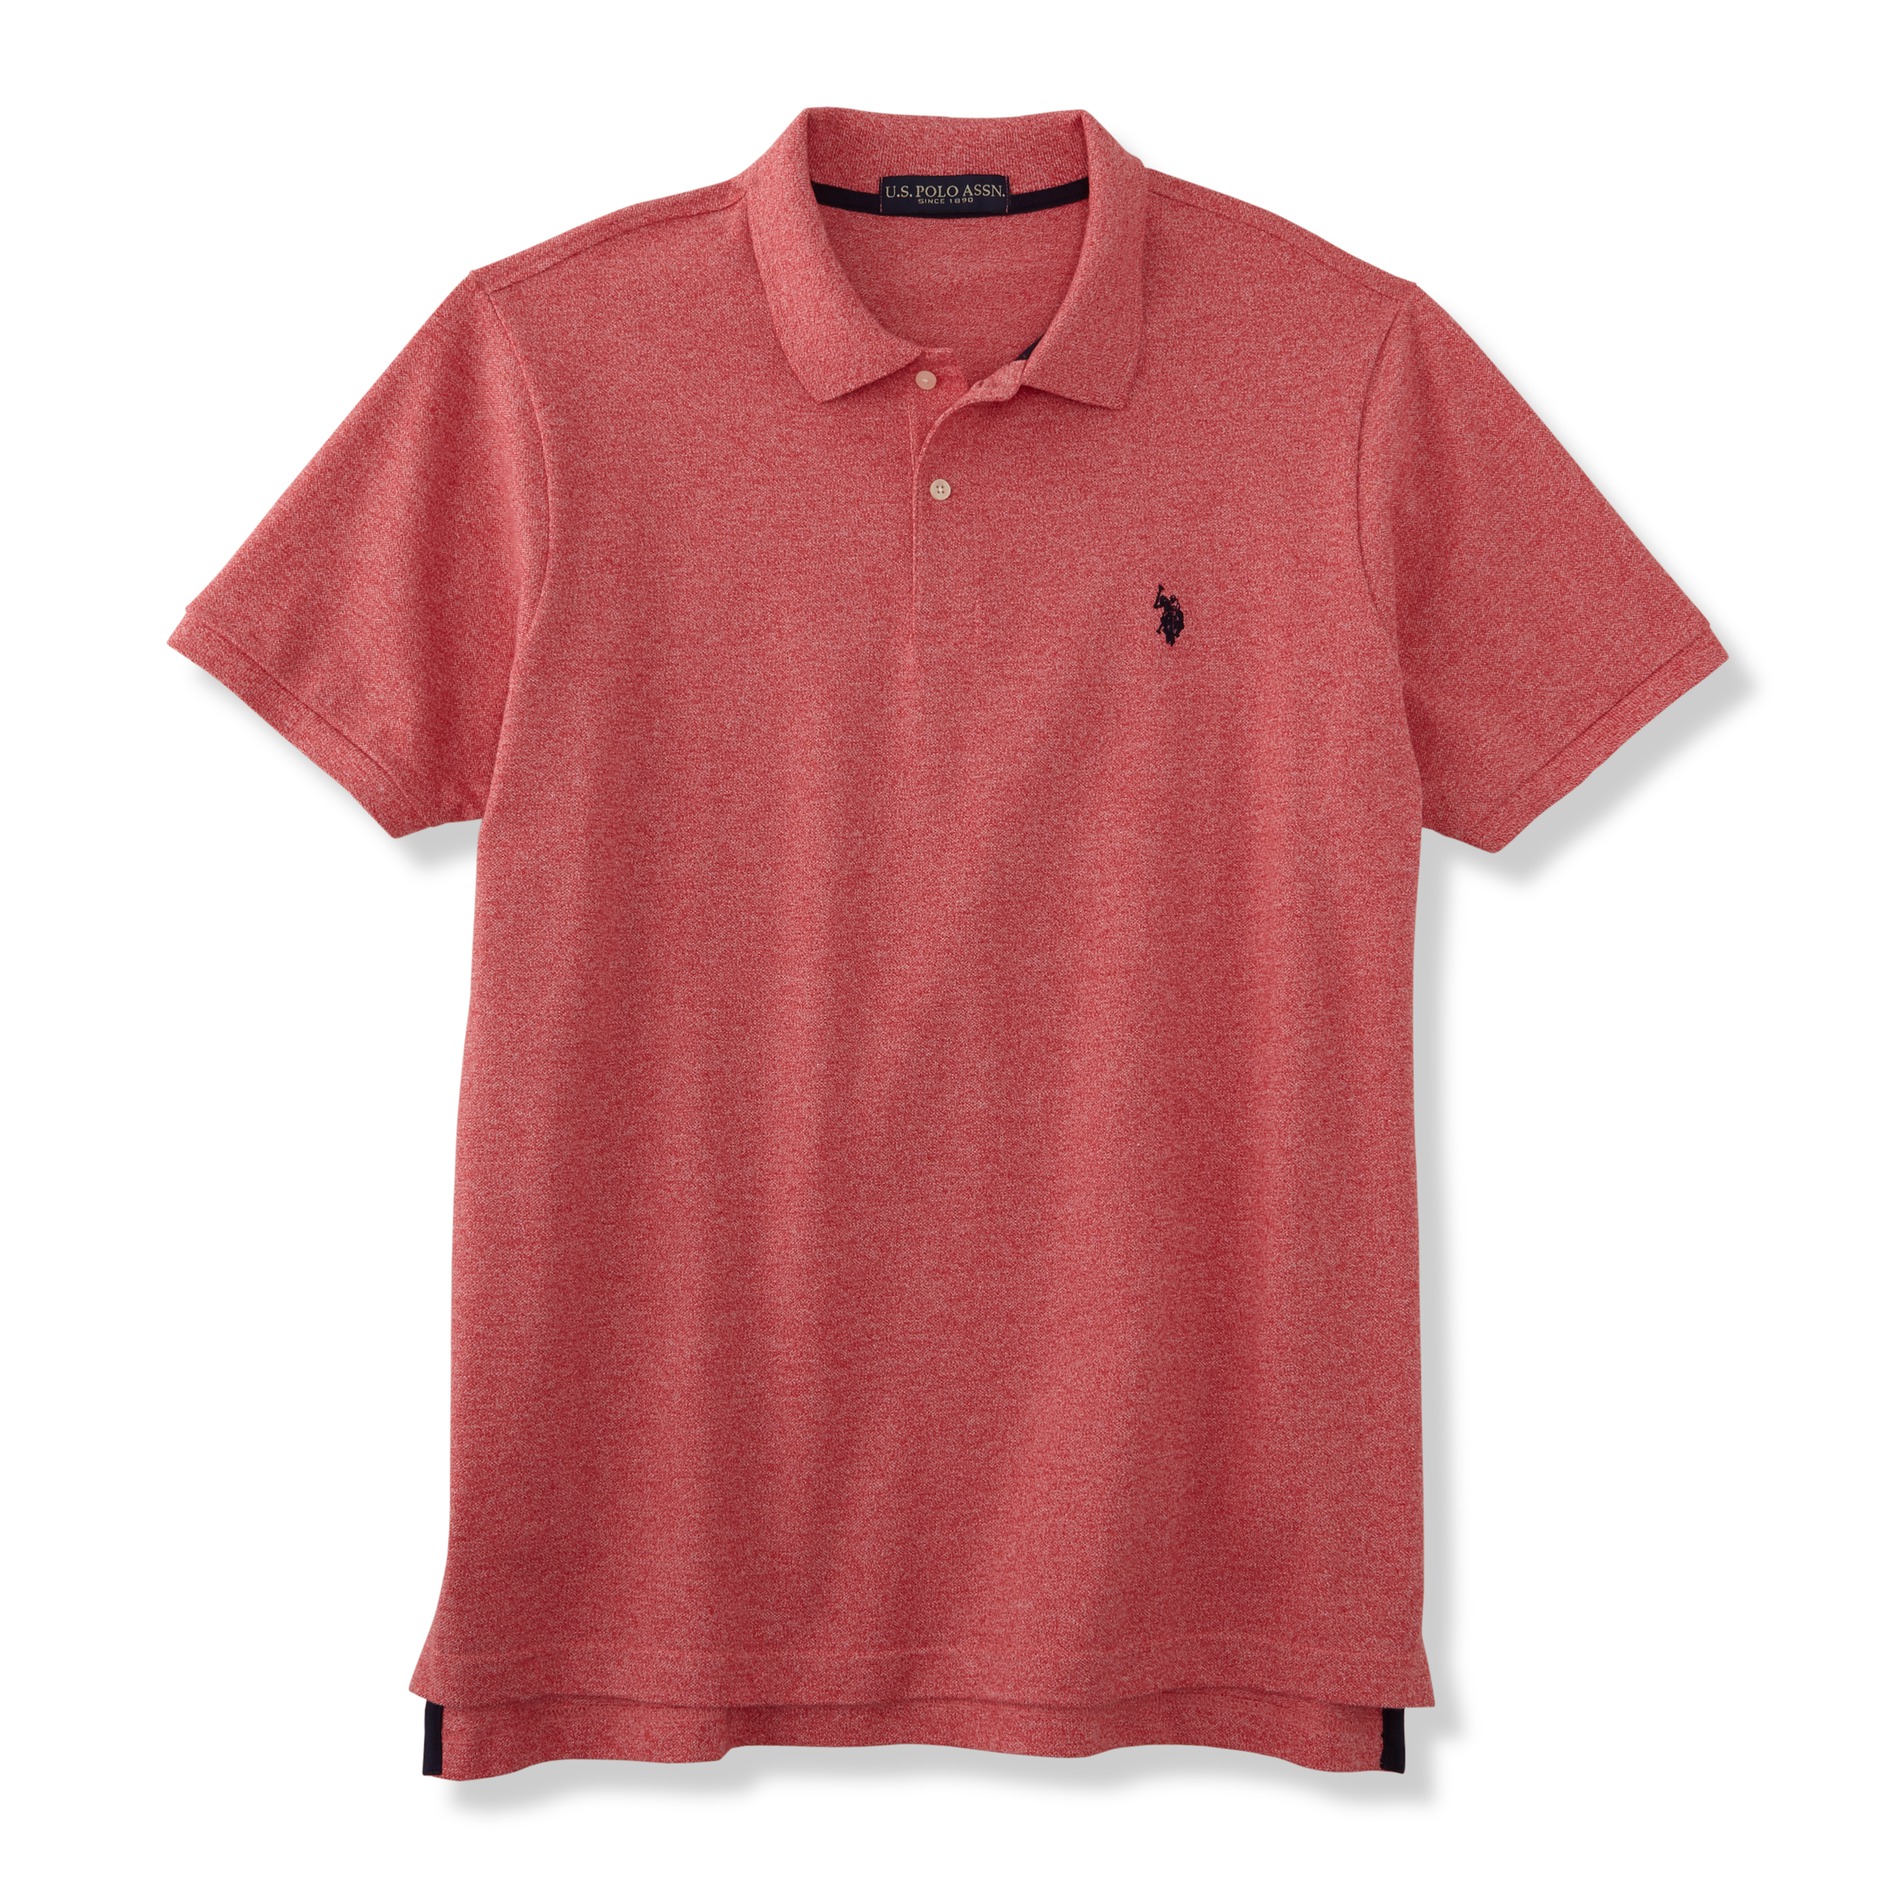 U.S. Polo Assn. Men's Polo Shirt-Marled